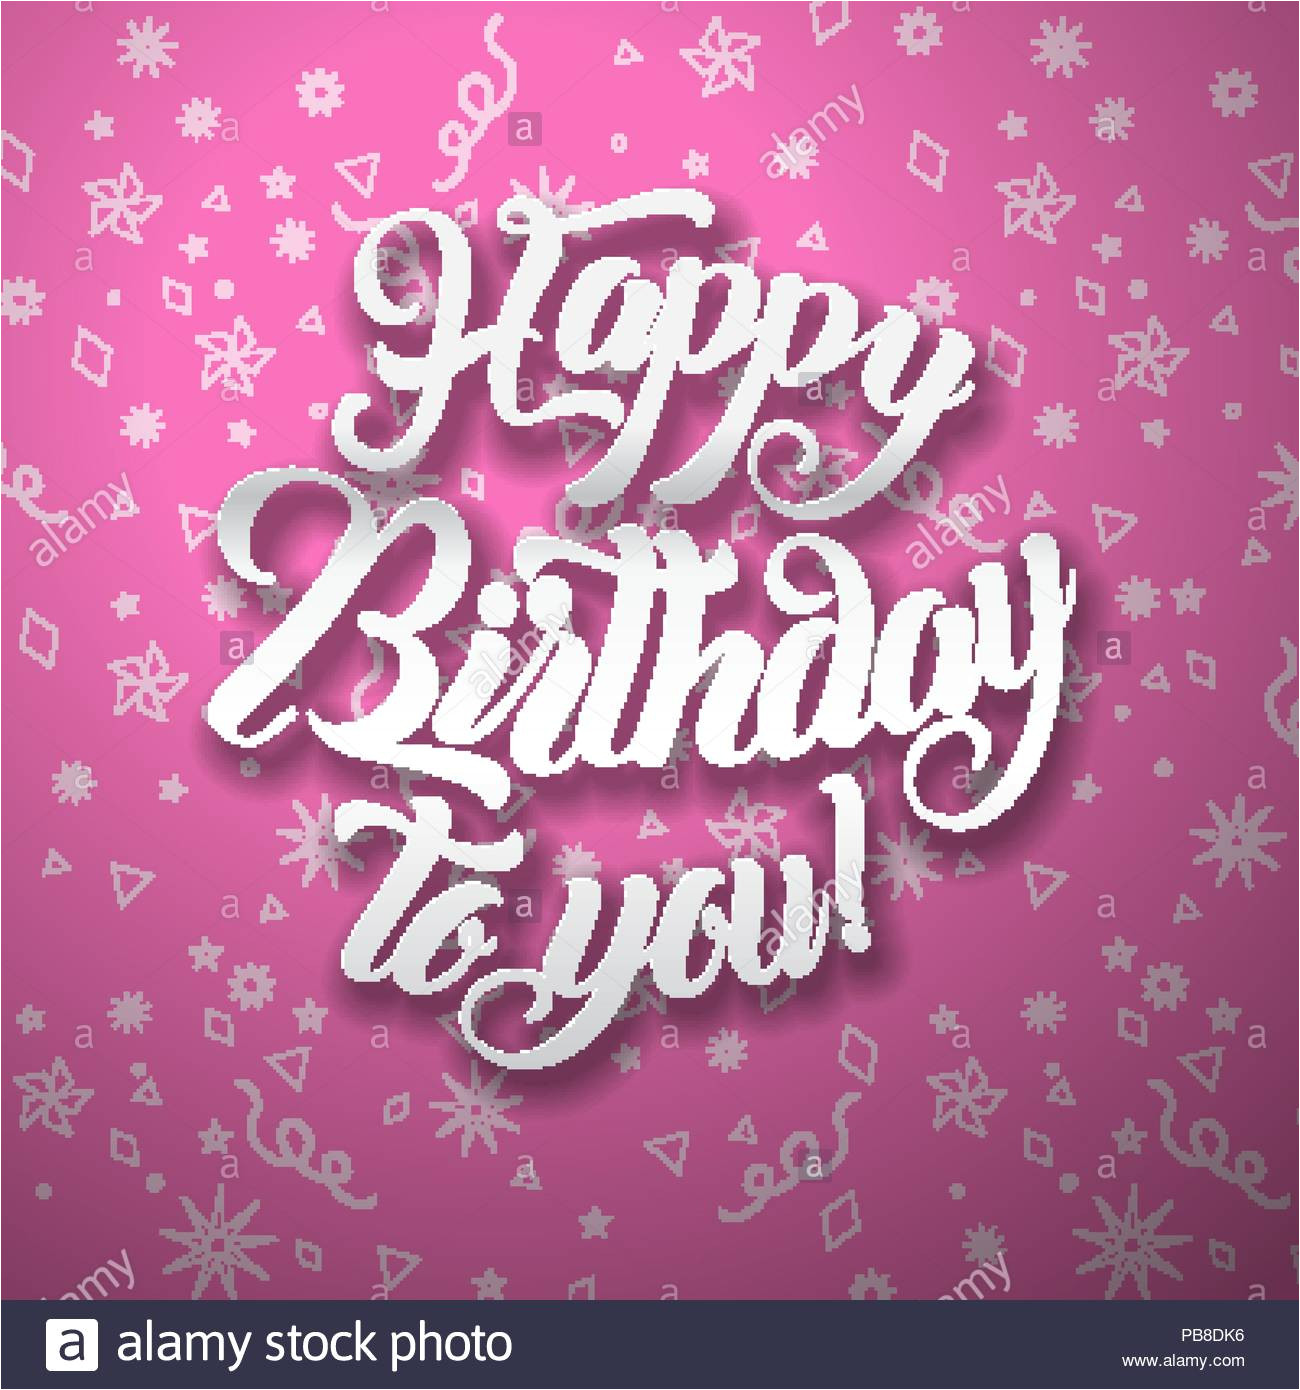 happy birthday to you lettering text vector illustration birthday greeting card design pb8dk6 jpg